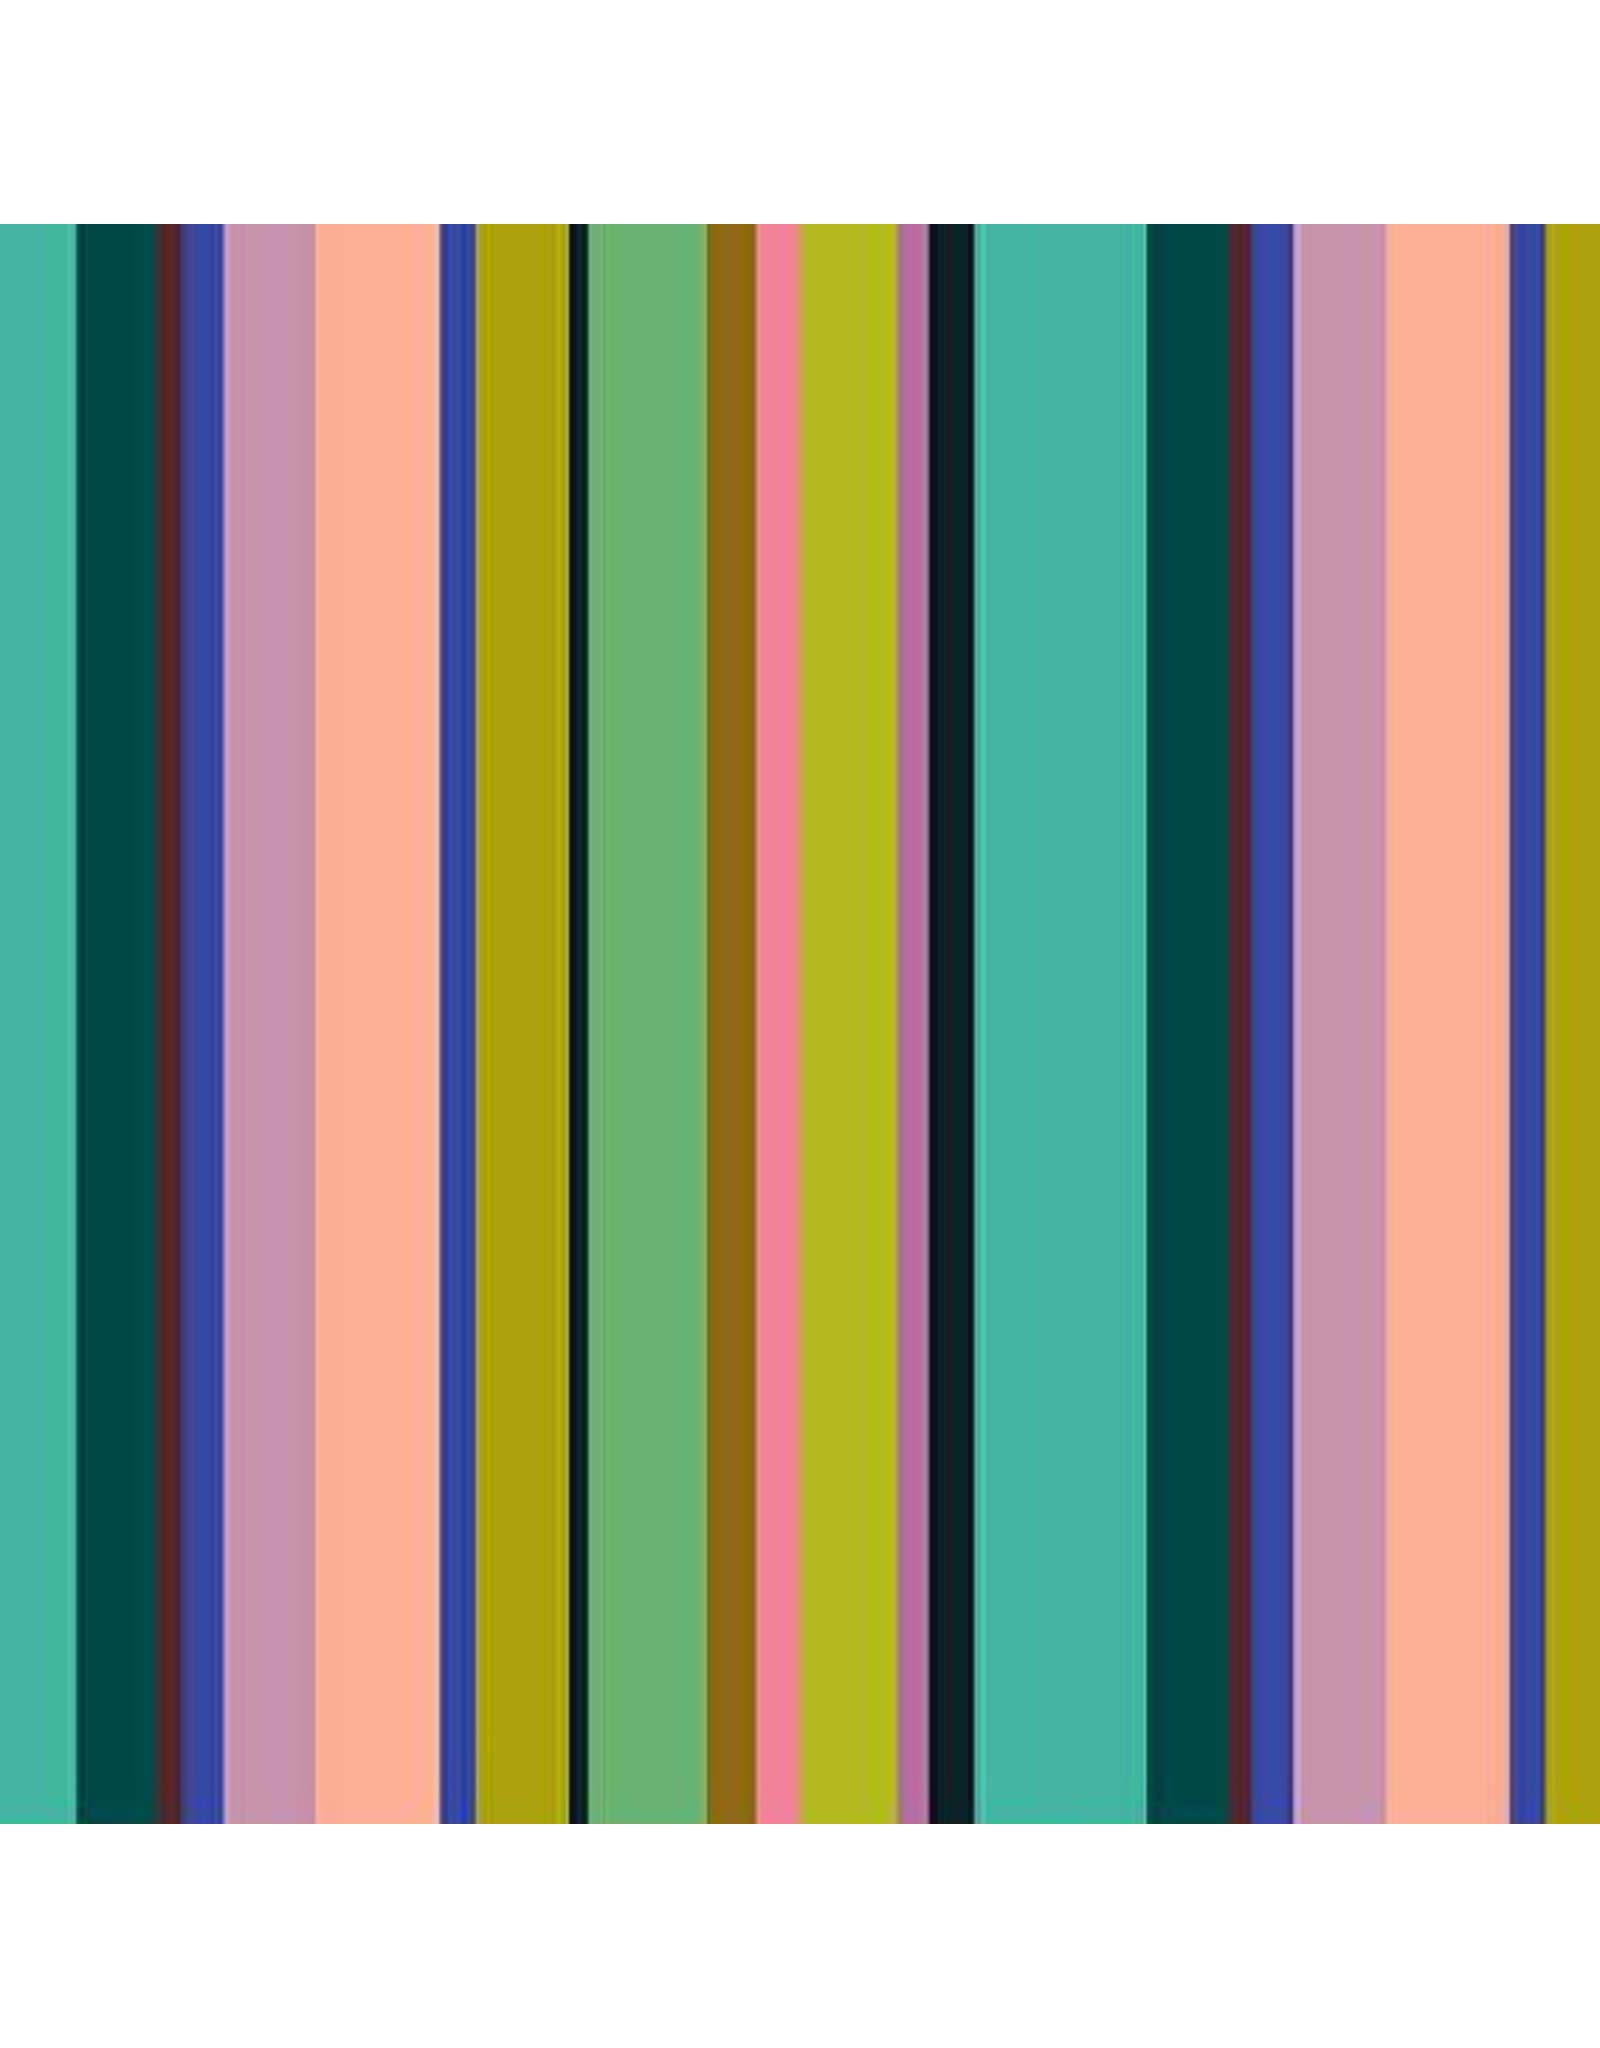 Windham Fabrics Color Wheel, Stripe in Multi, Fabric Half-Yards